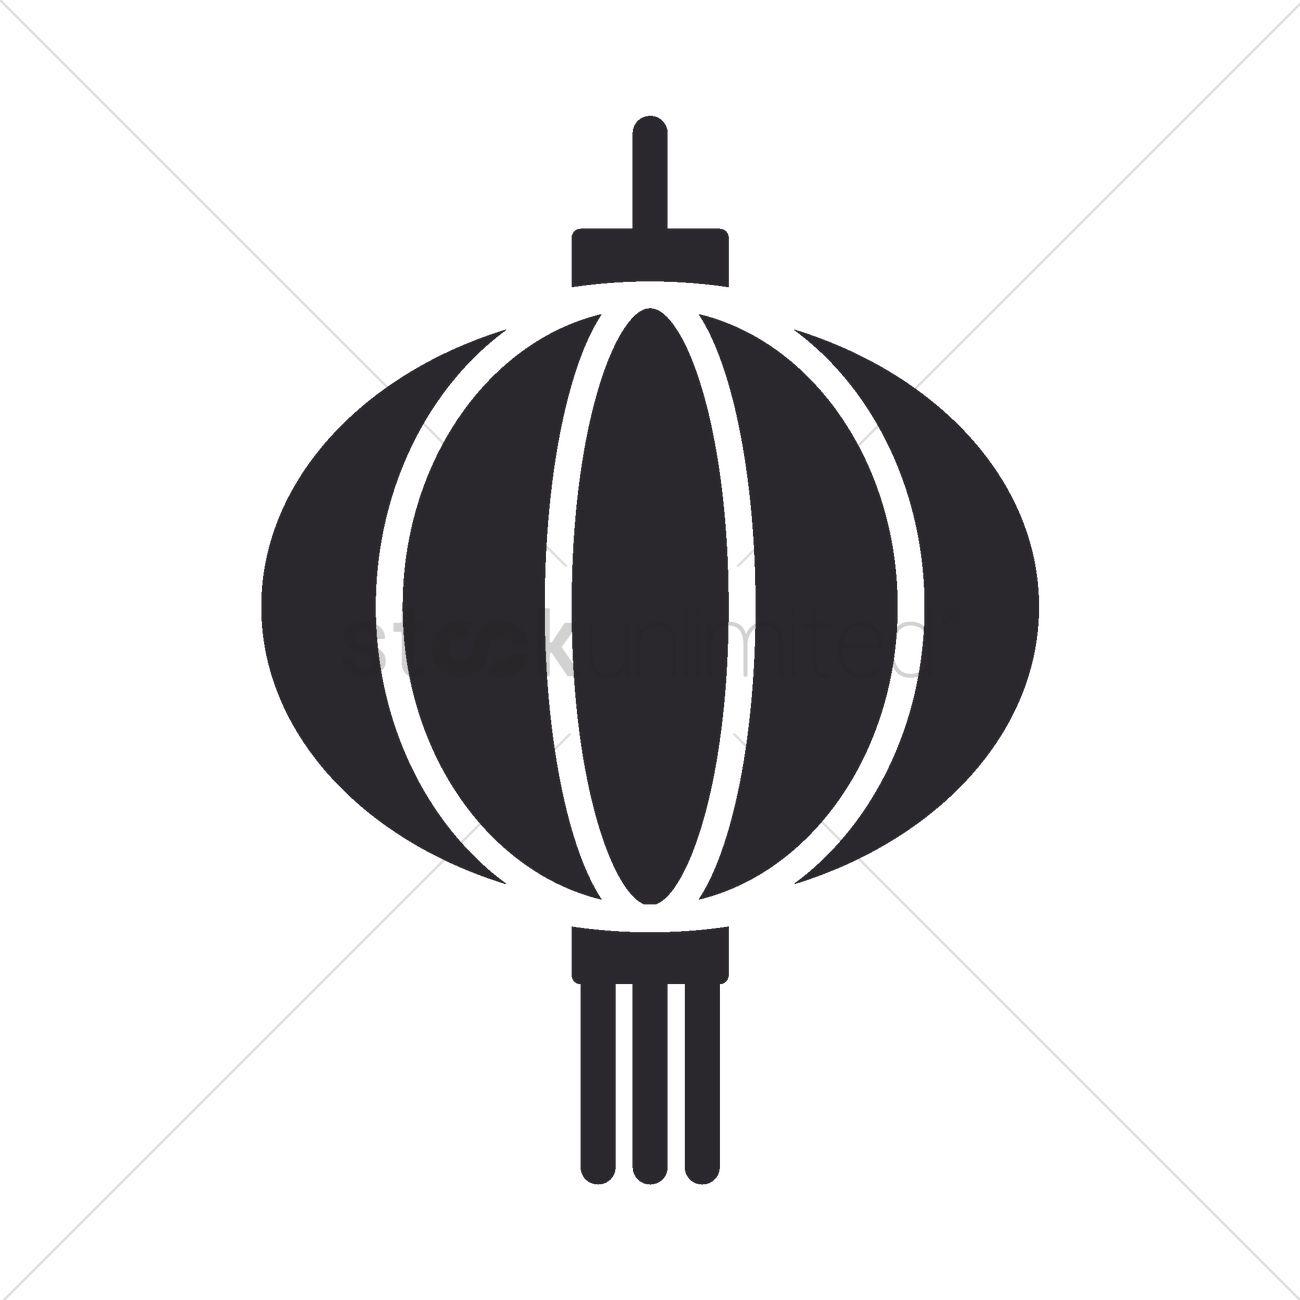 Black Chinese Logo - Chinese lantern Vector Image - 1967699 | StockUnlimited